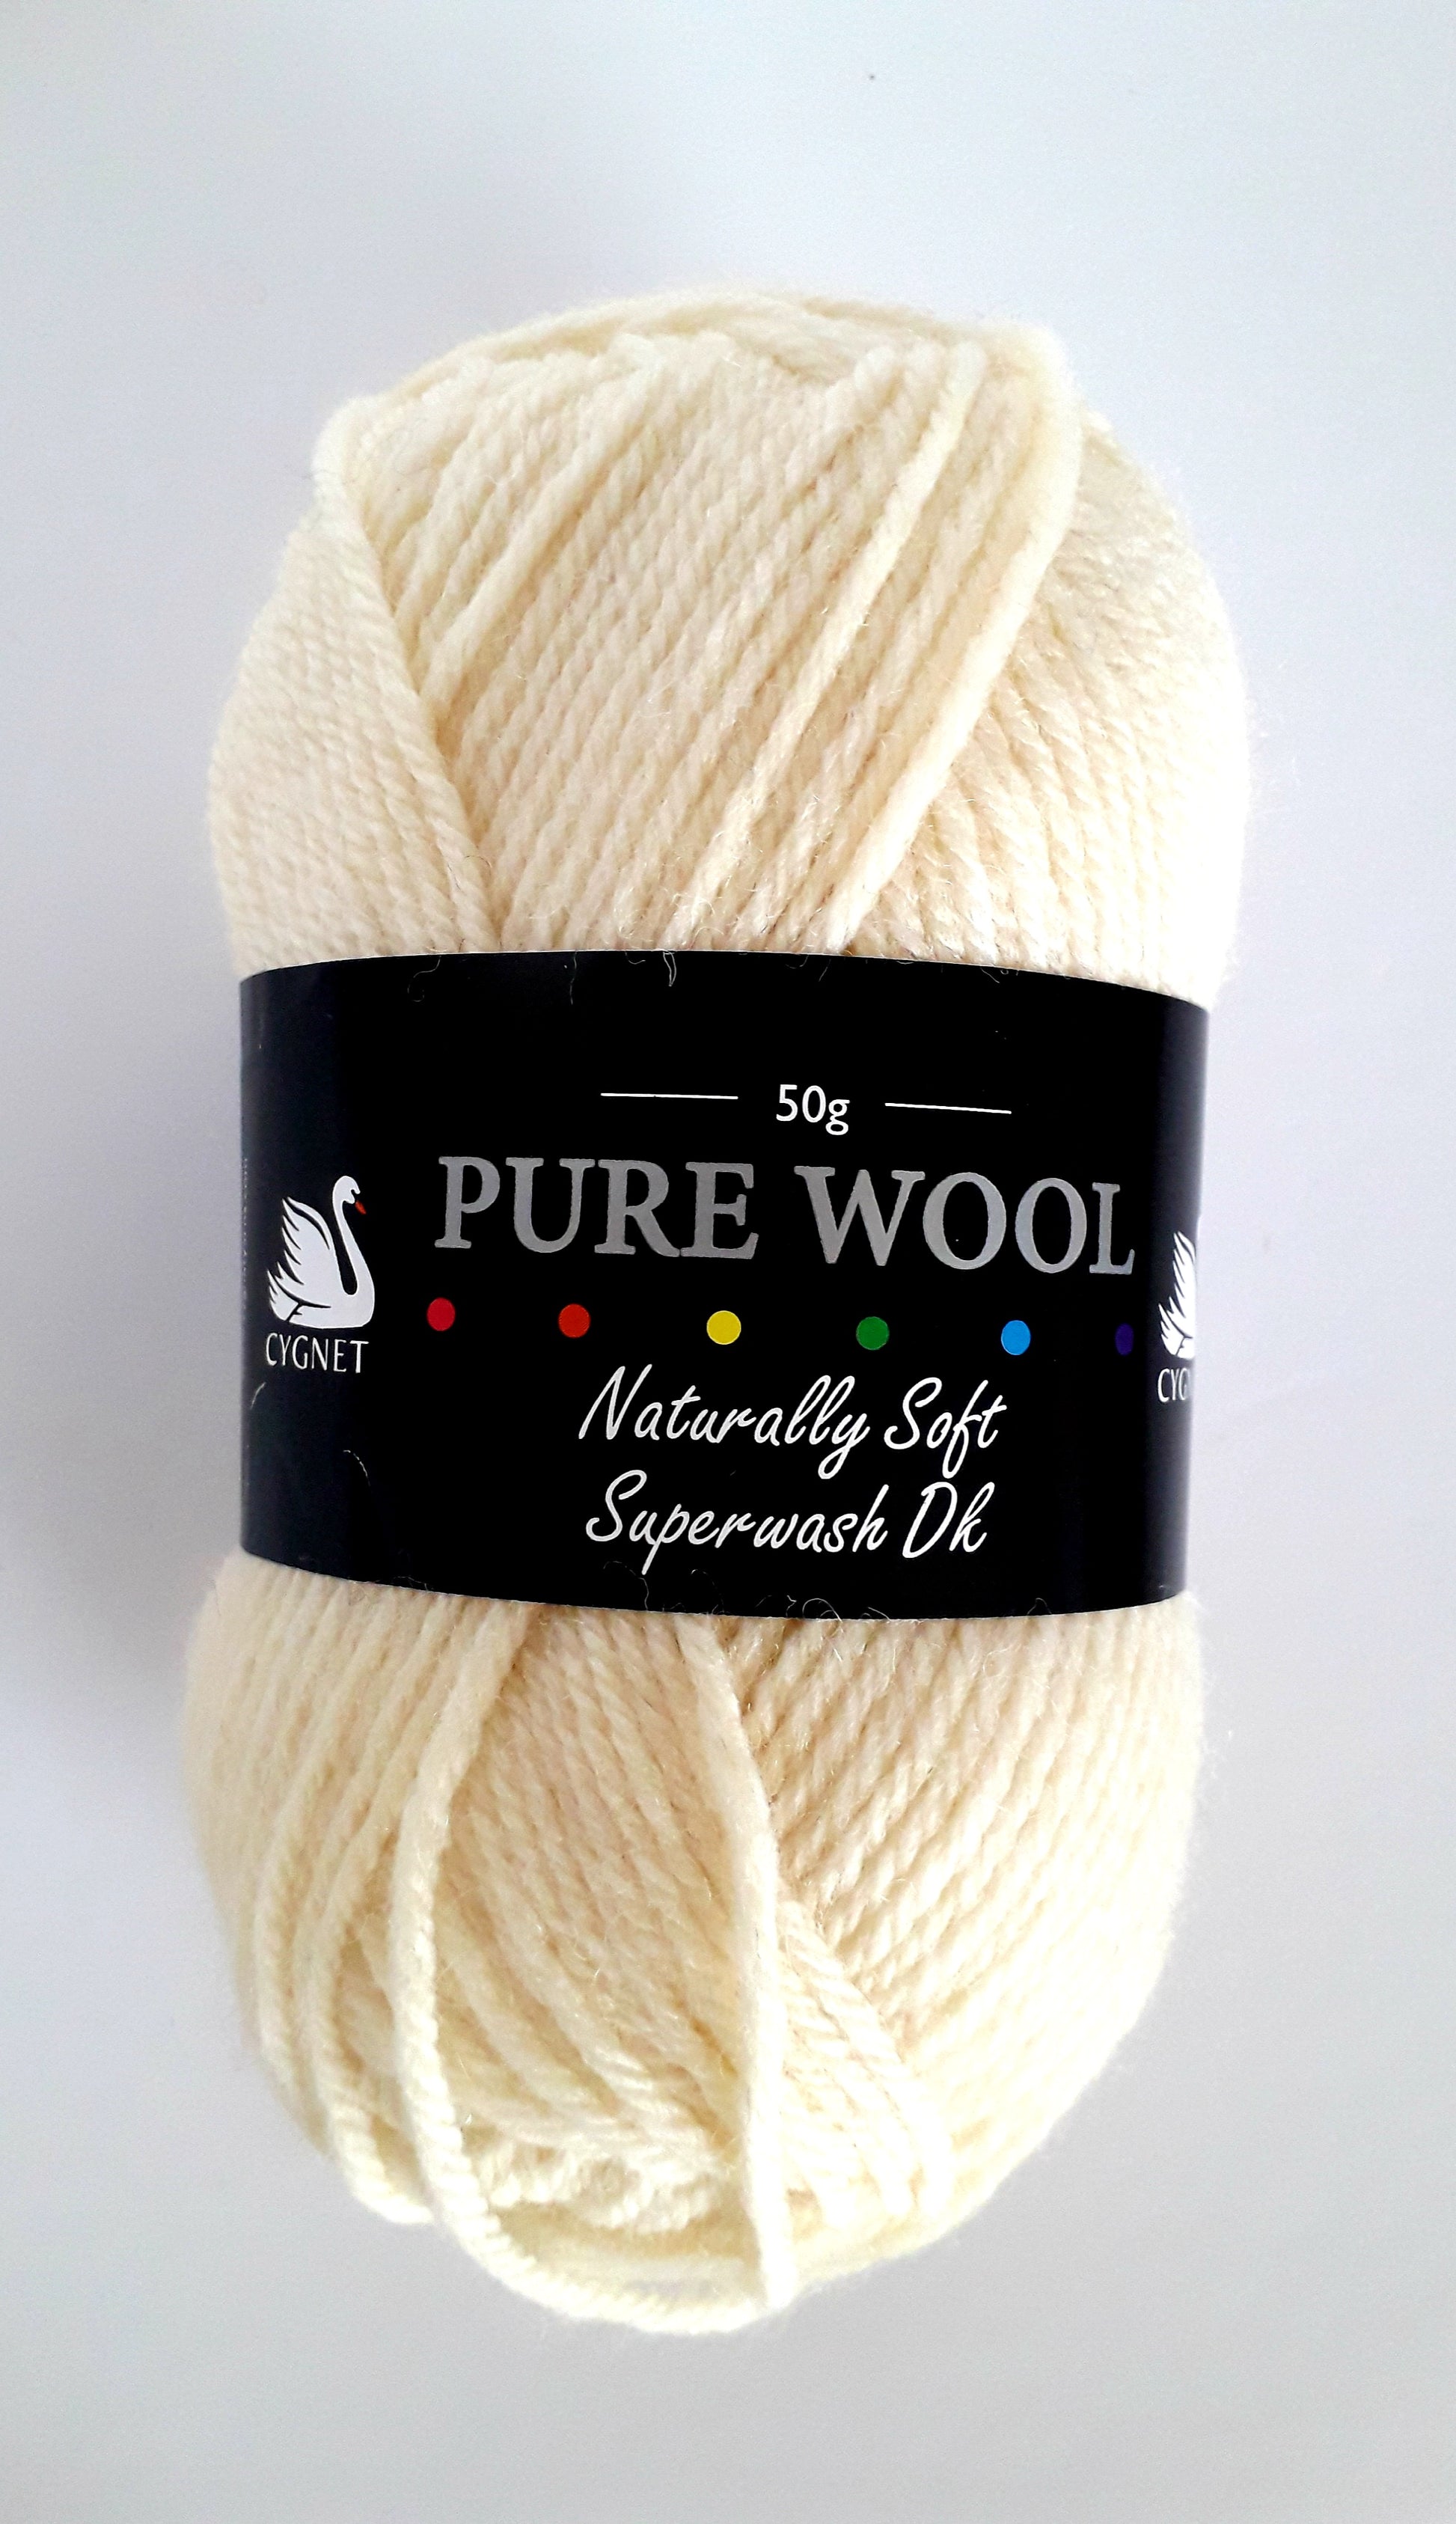 A natural white wool ball 